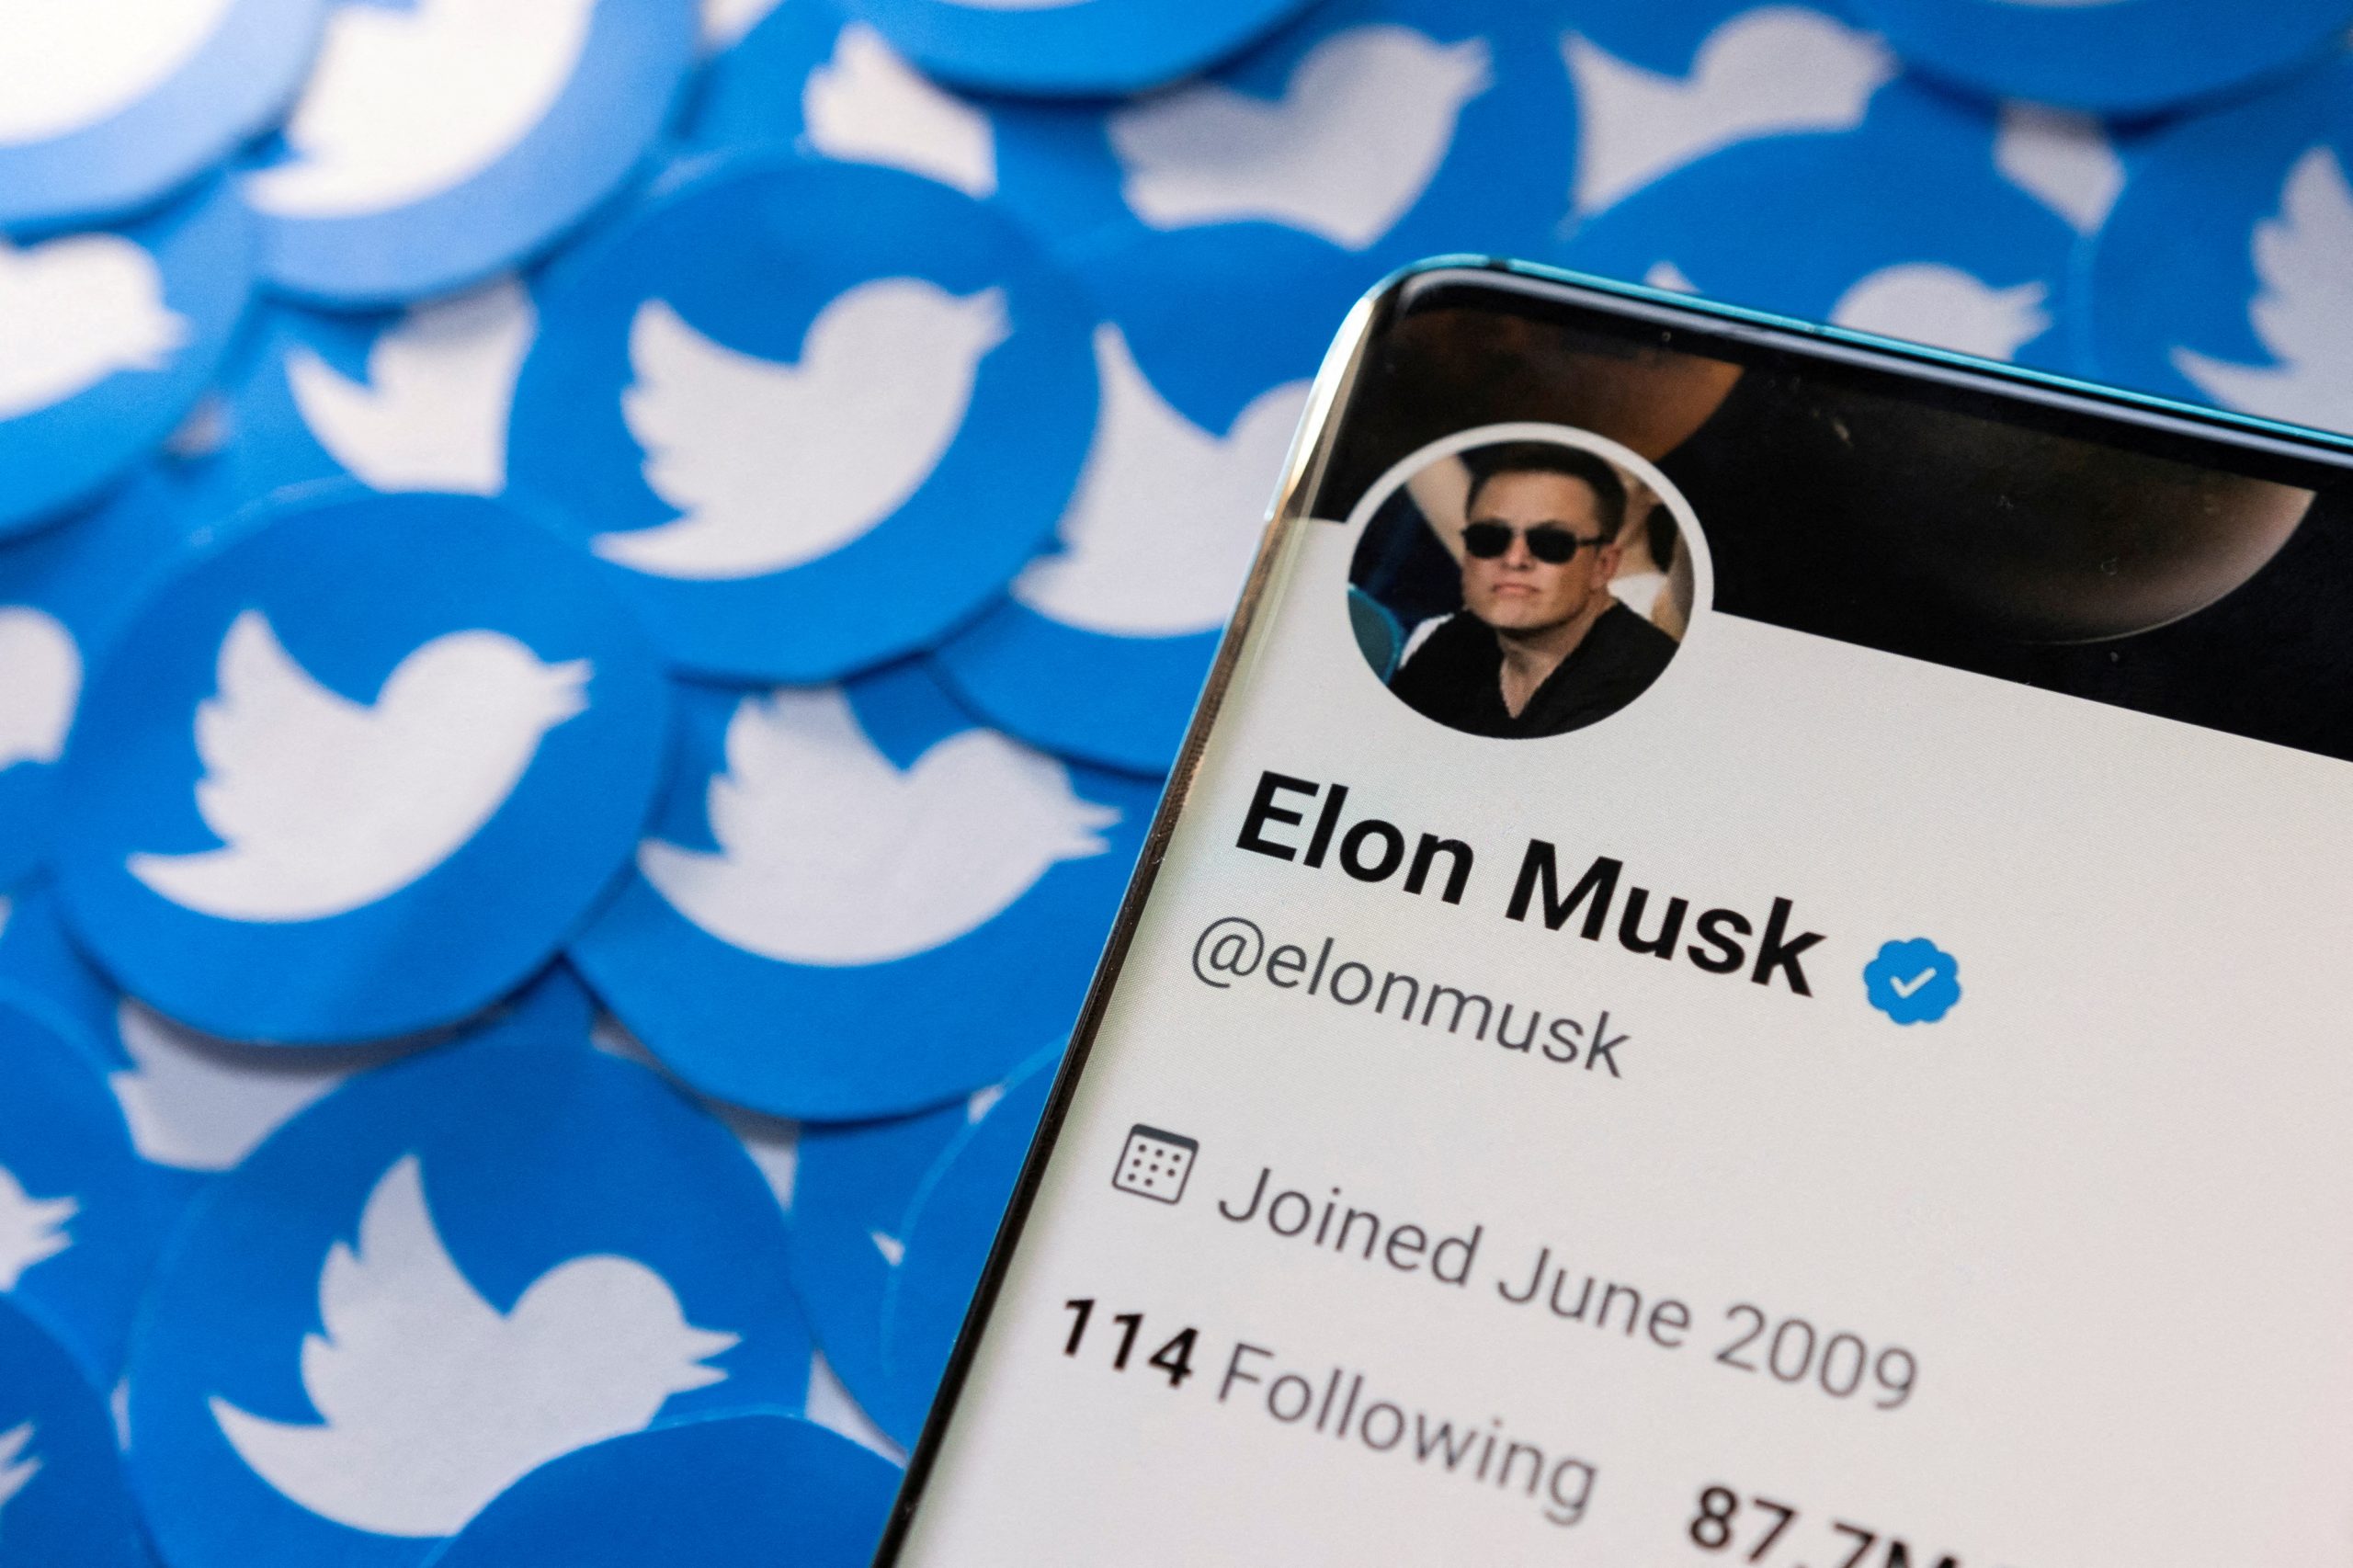 Elon Musk's acquisition of Twitter